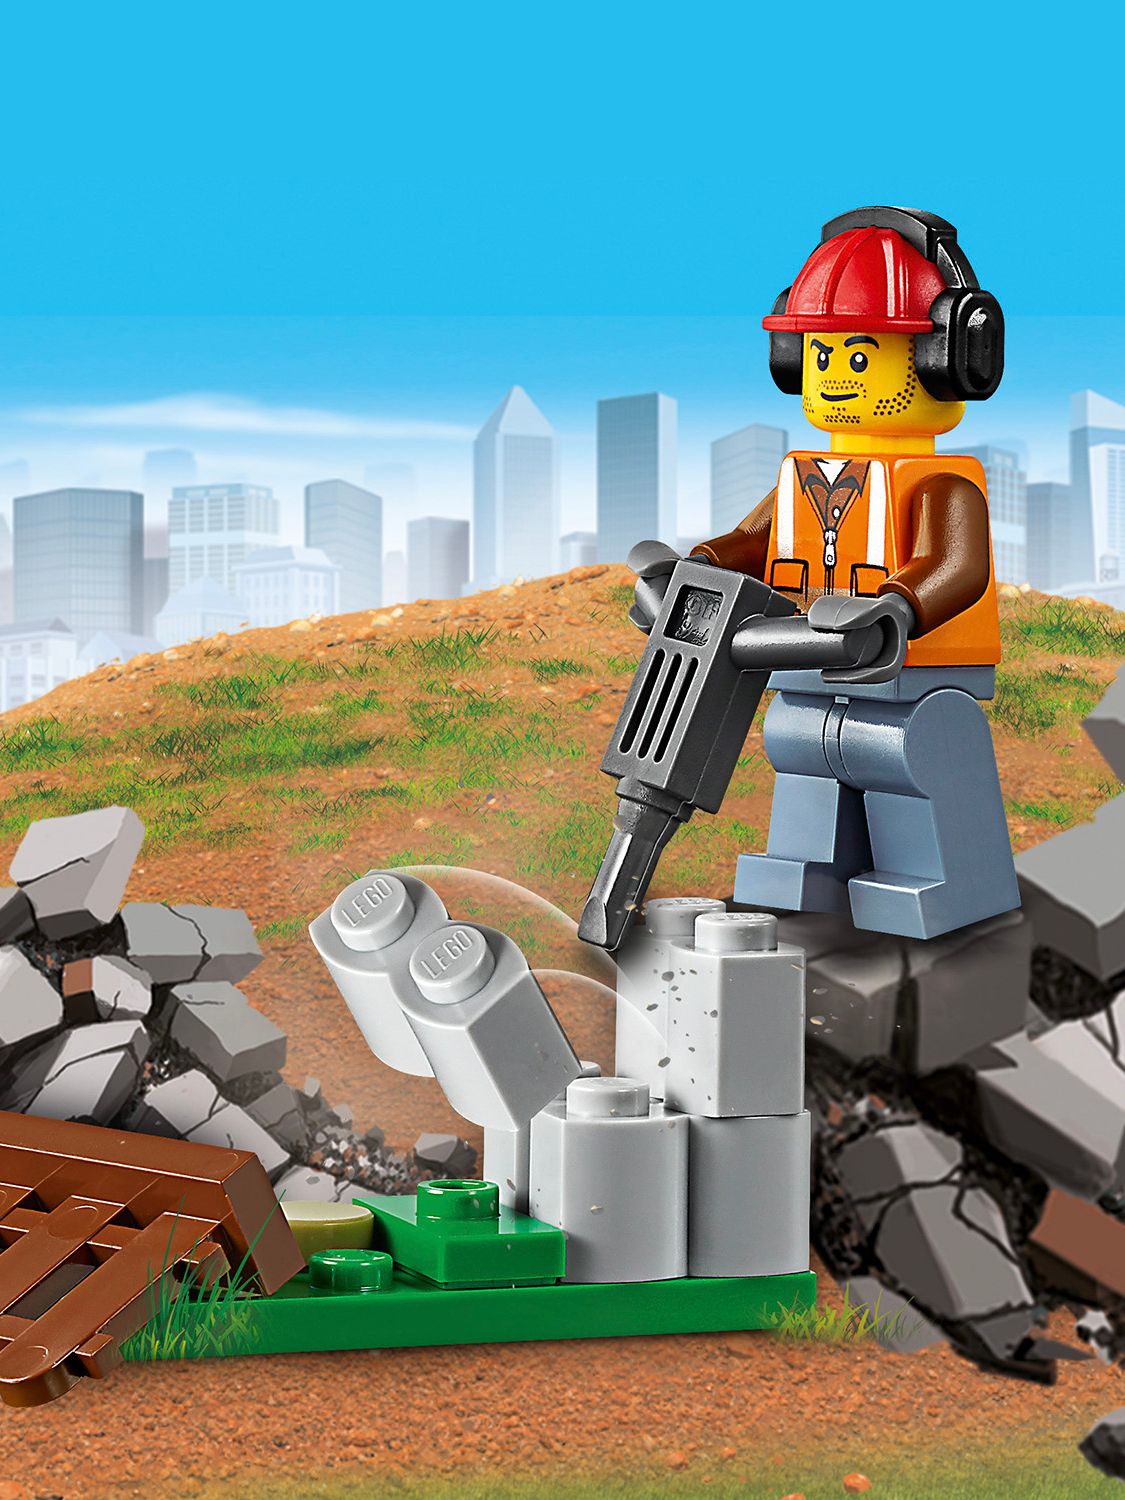 lego city construction loader